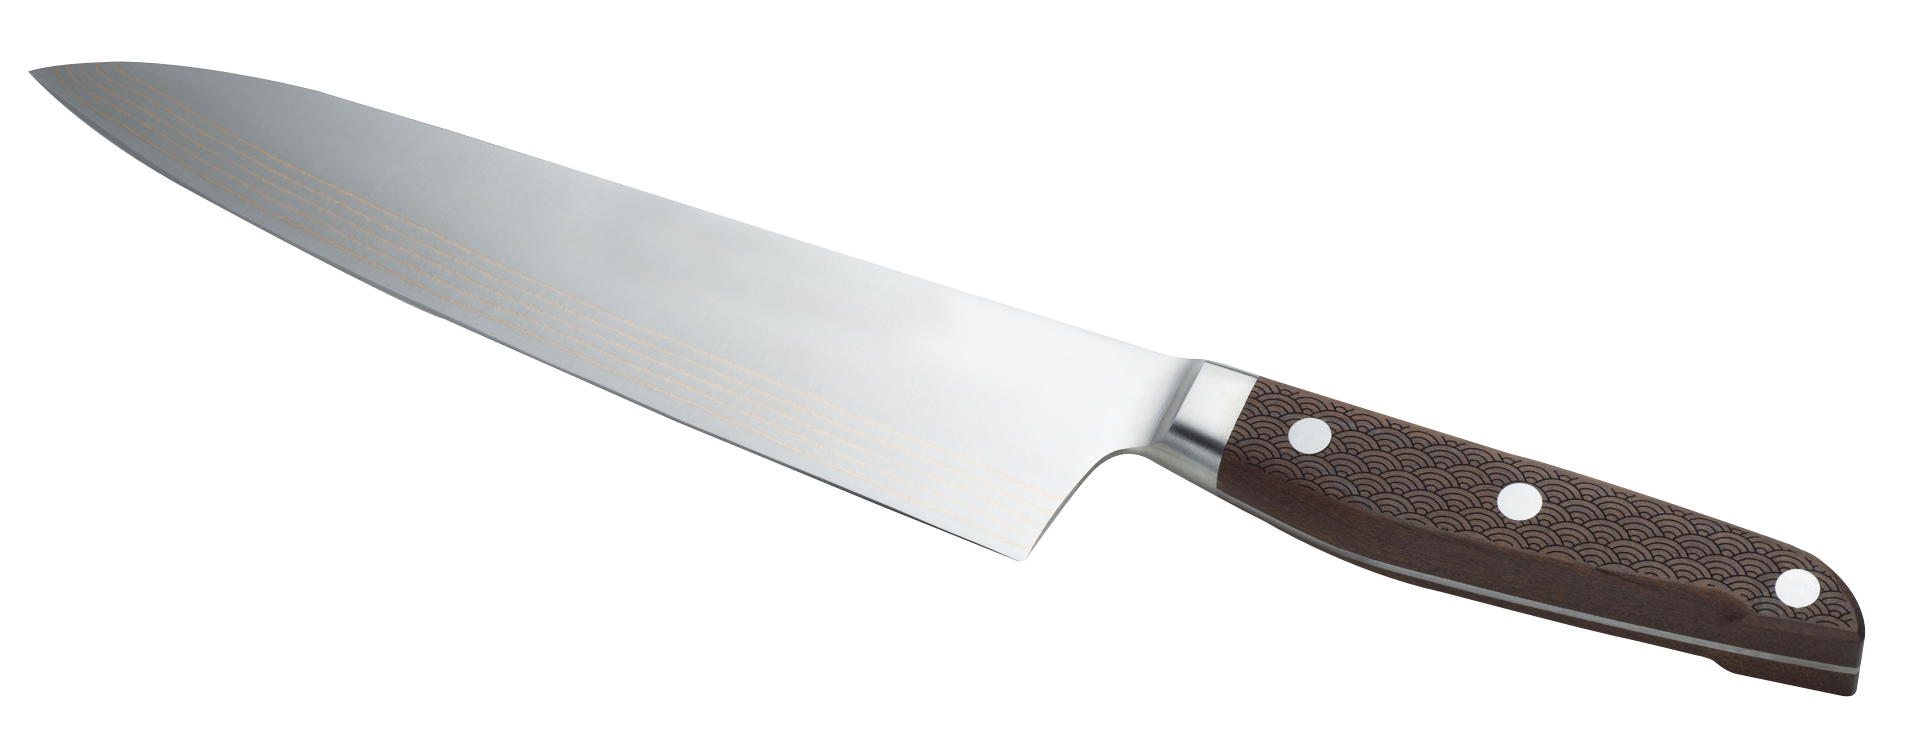 Iron Hatchet Scissors Objects Knife PNG